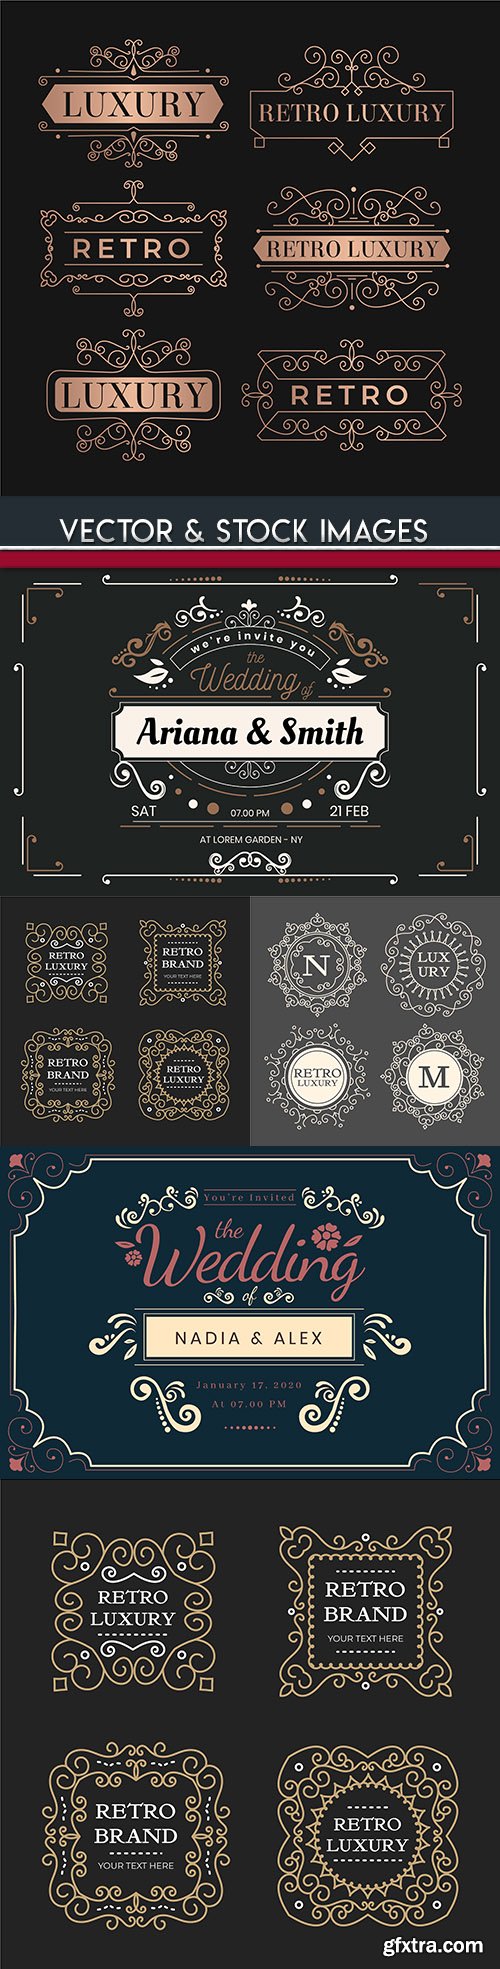 Wedding invitation and decorative design elements